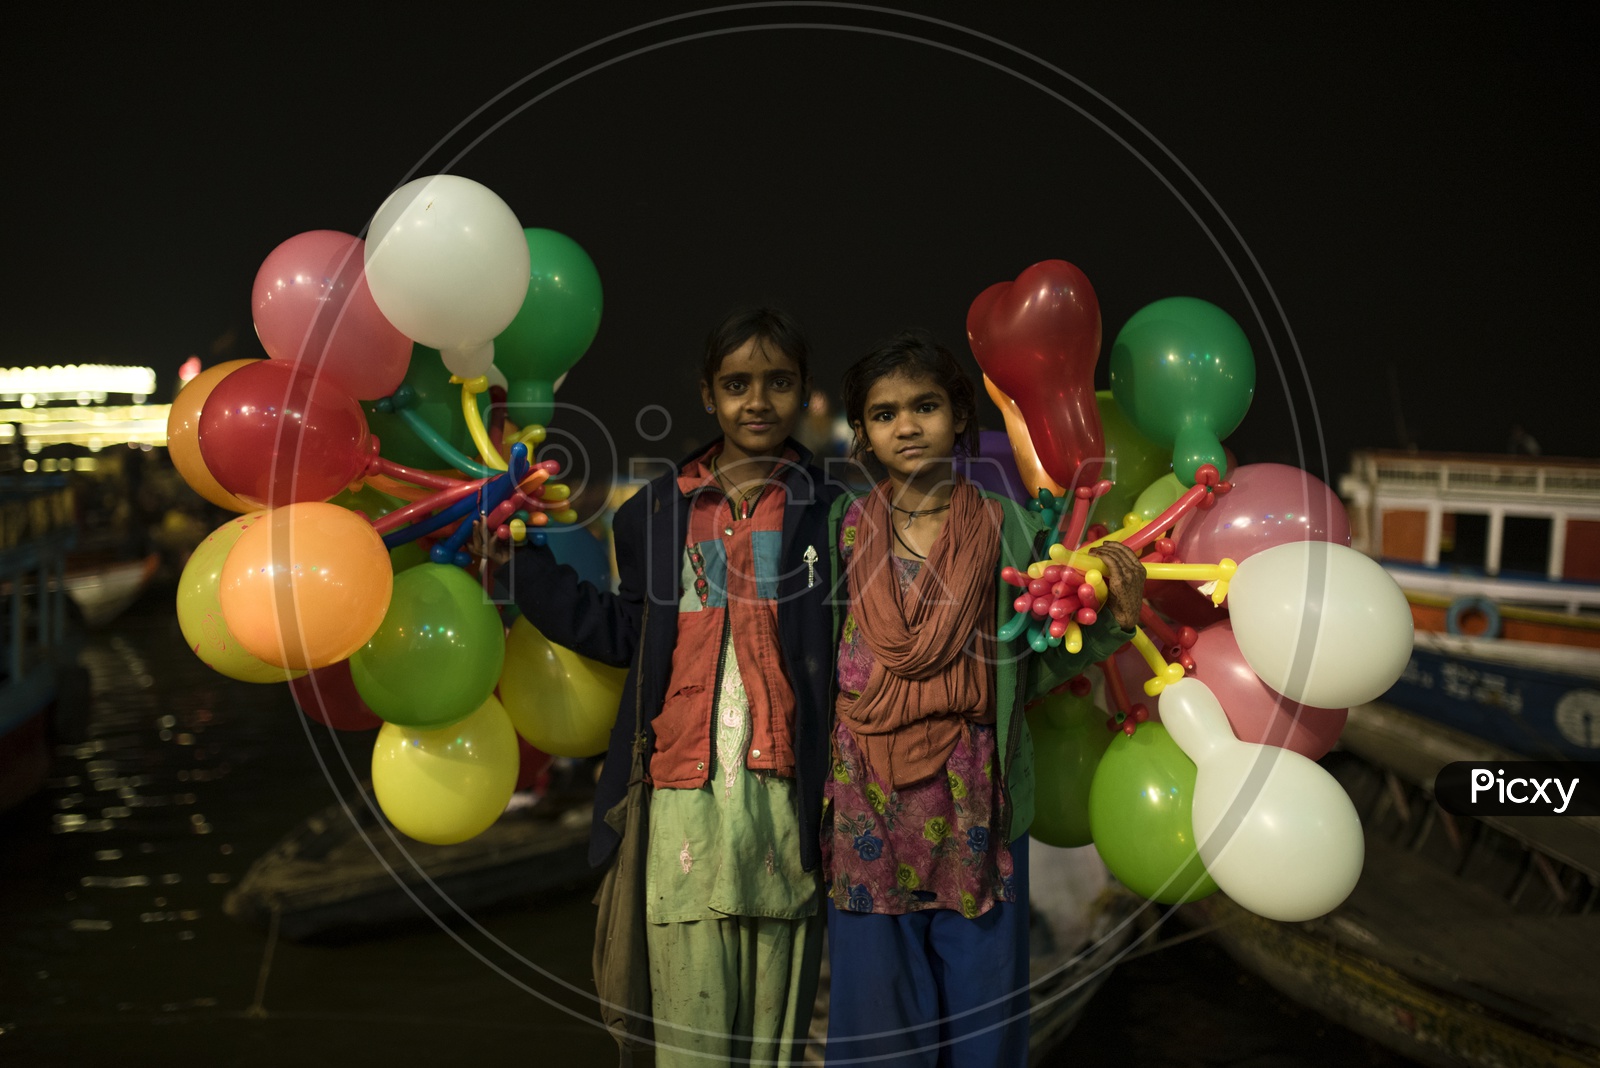 Girls Selling Balloons in Varanasi